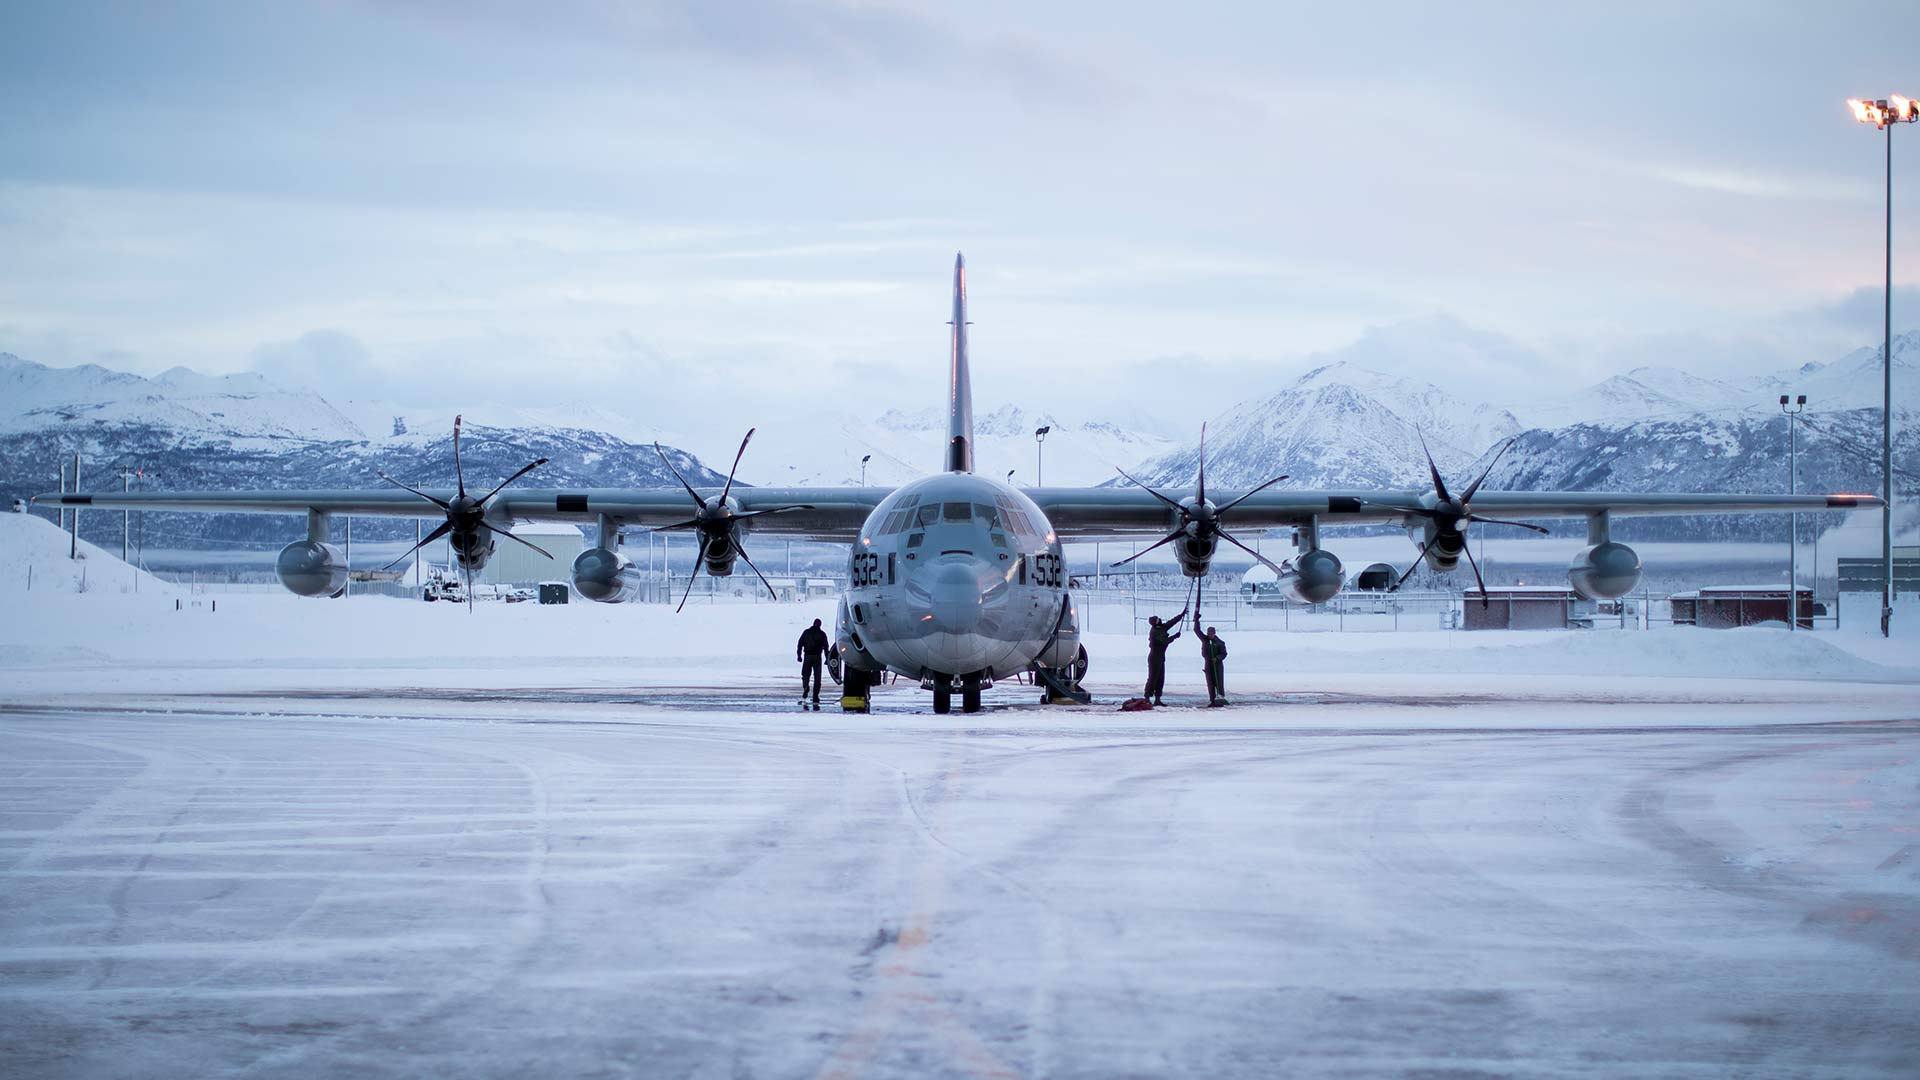 Providing predictable availability for C-130 aircraft across the globe